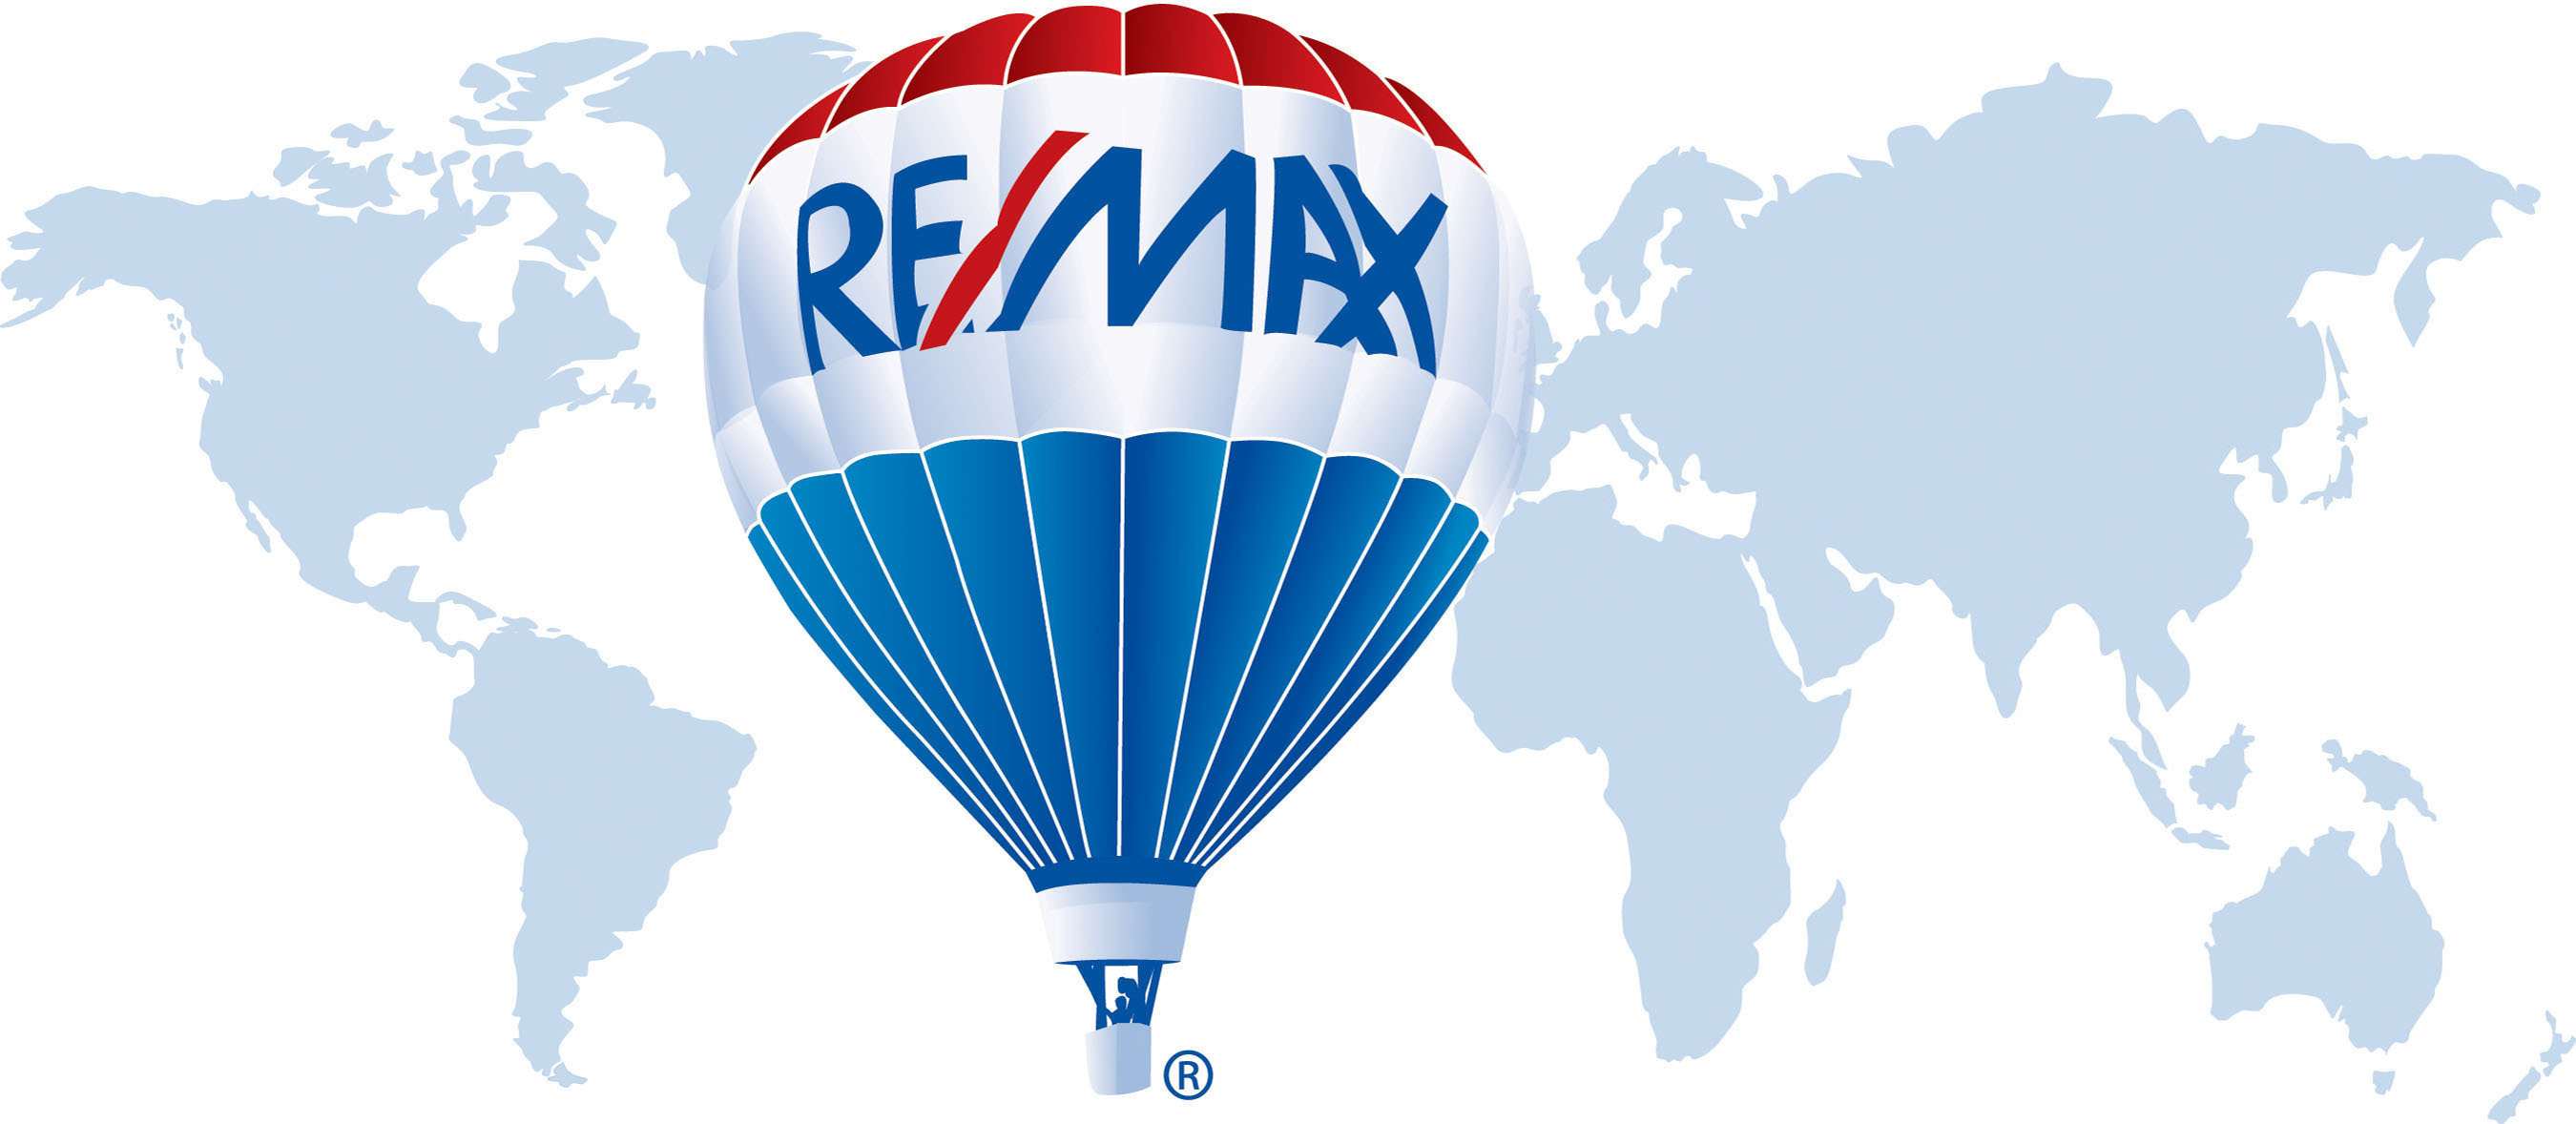 RE/MAX, LLC Logo. (PRNewsFoto/RE/MAX International, Inc.)